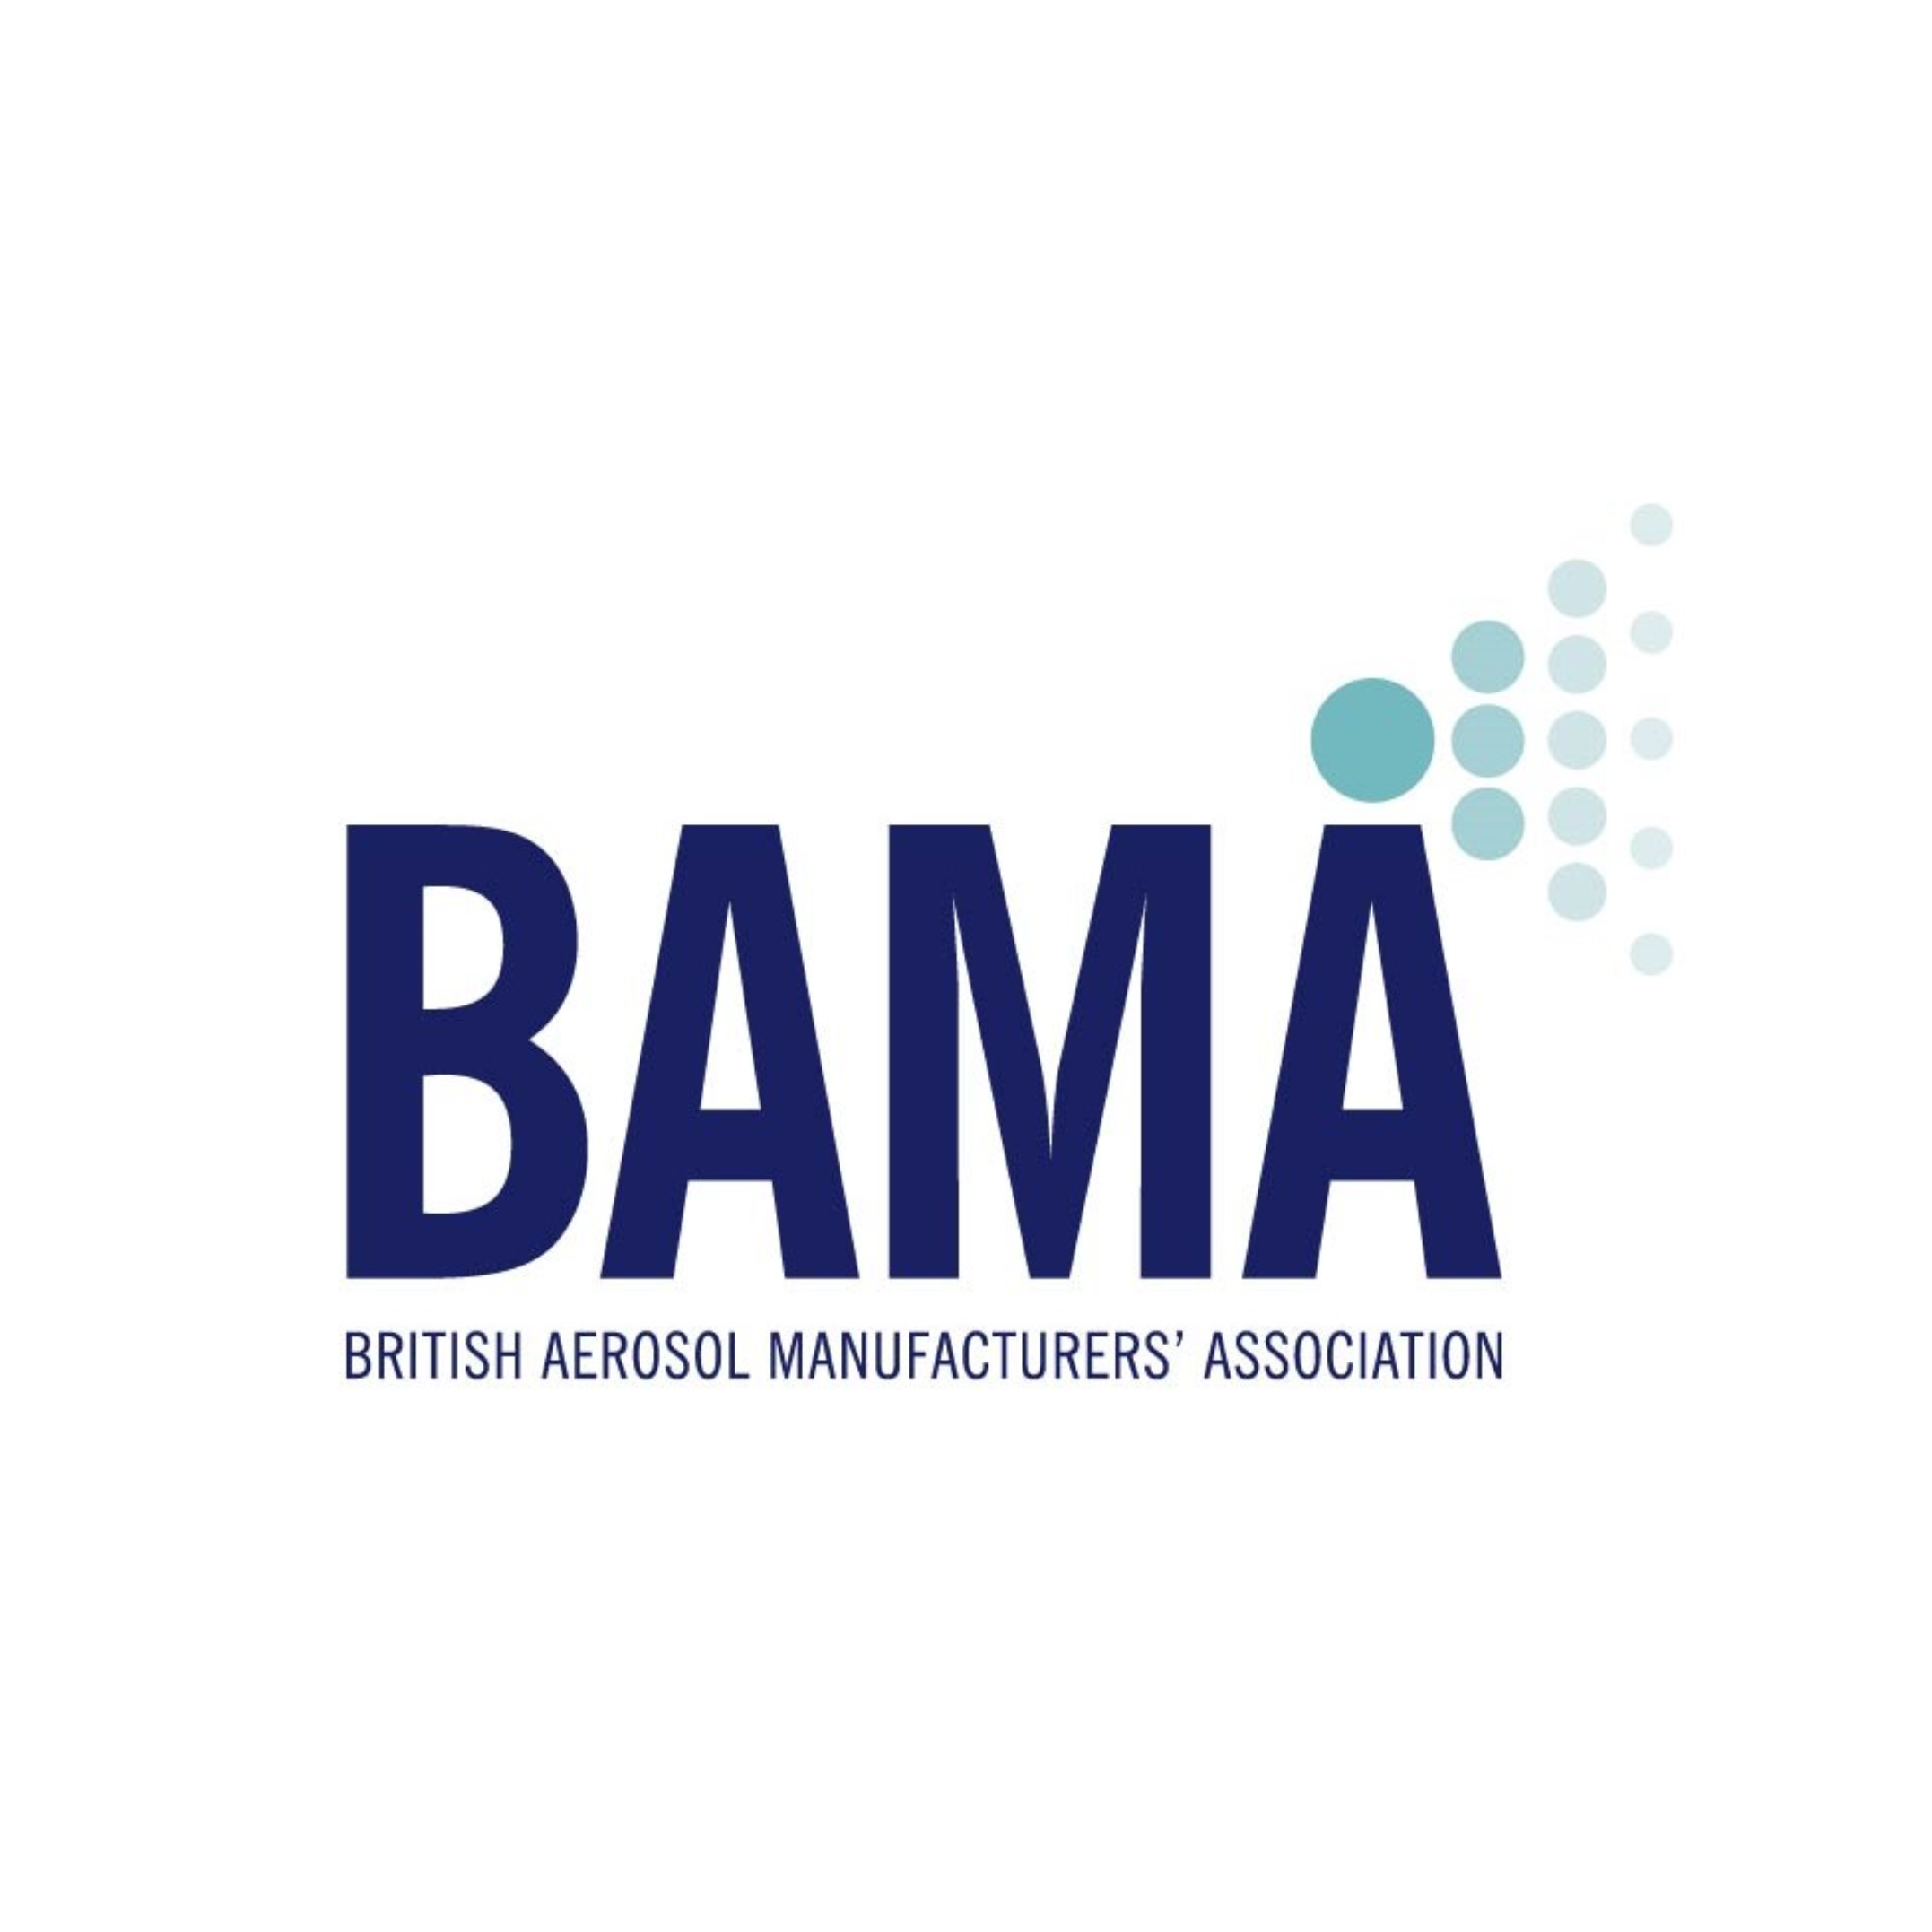 British Aerosol Manufacturers’ Association (BAMA)